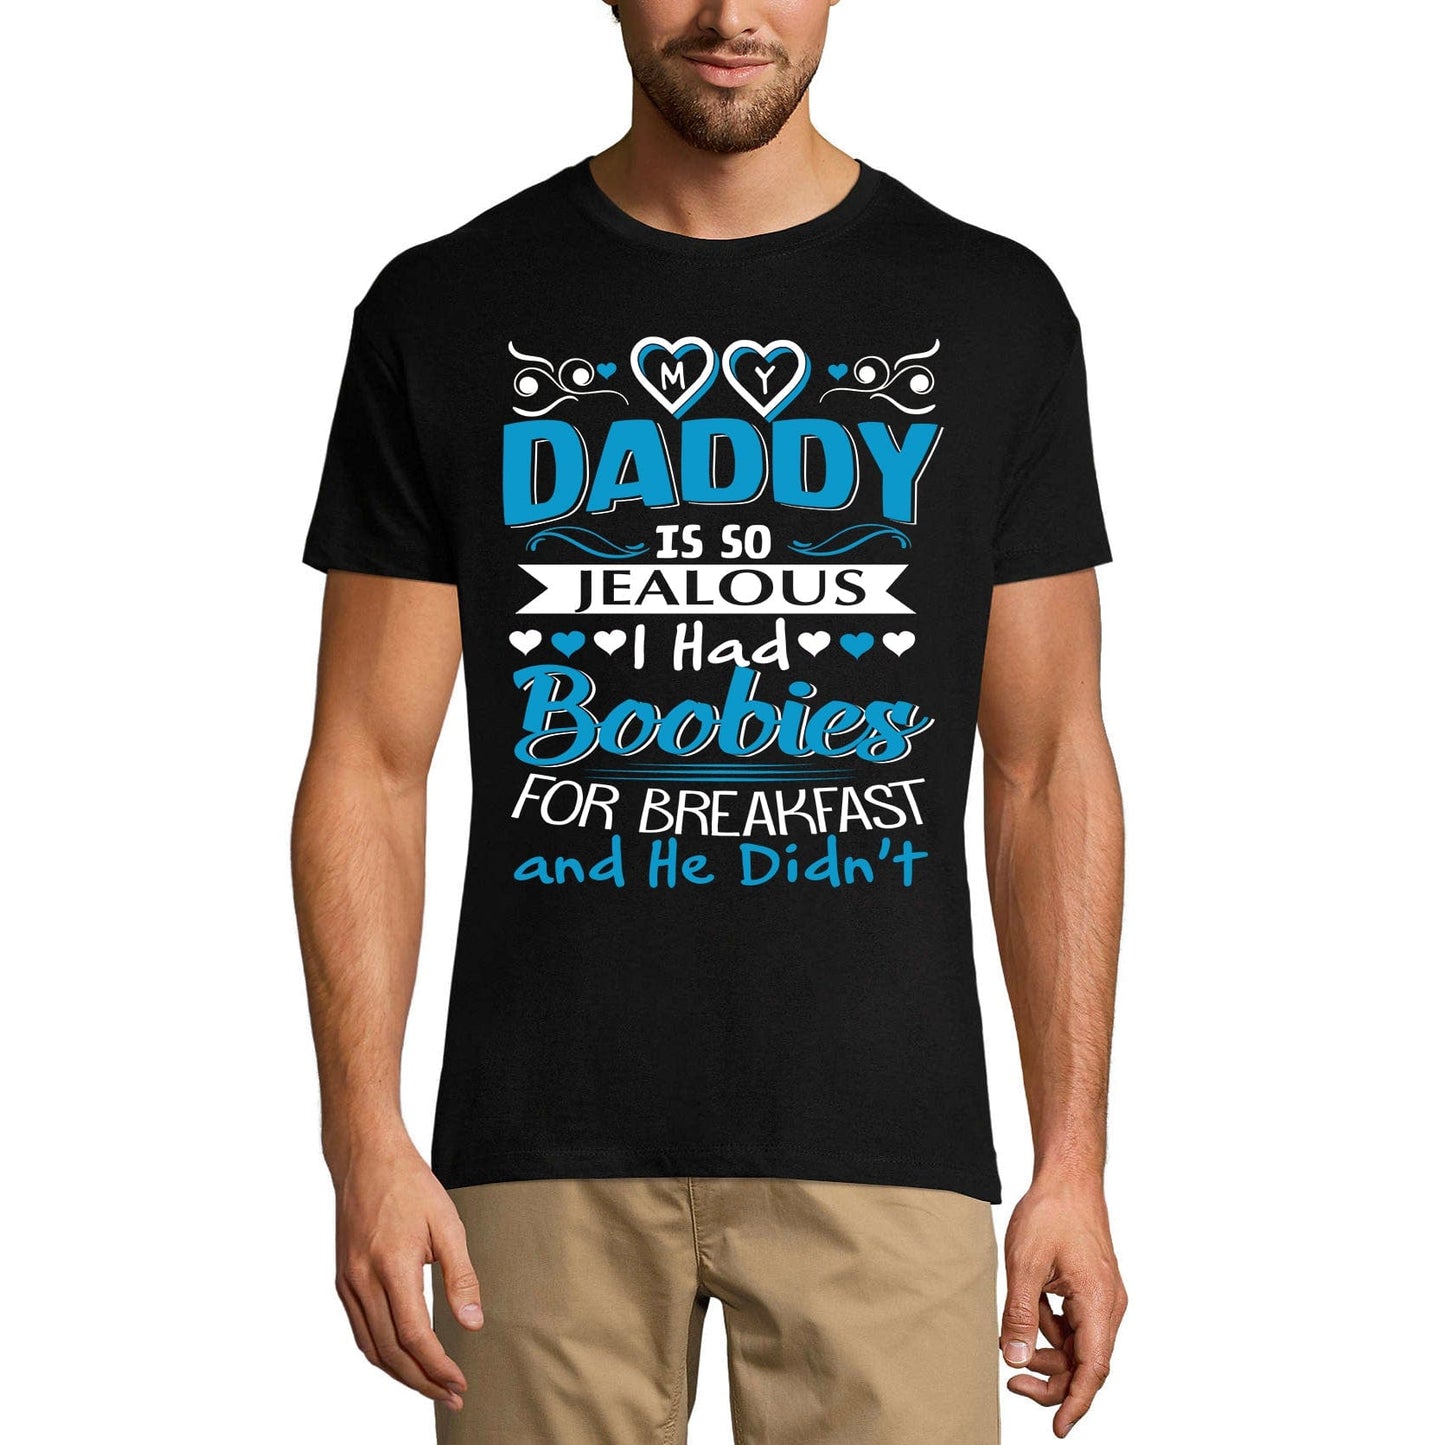 ULTRABASIC Men's Novelty T-Shirt My Daddy is so Jealous - Funny Joke Tee Shirt